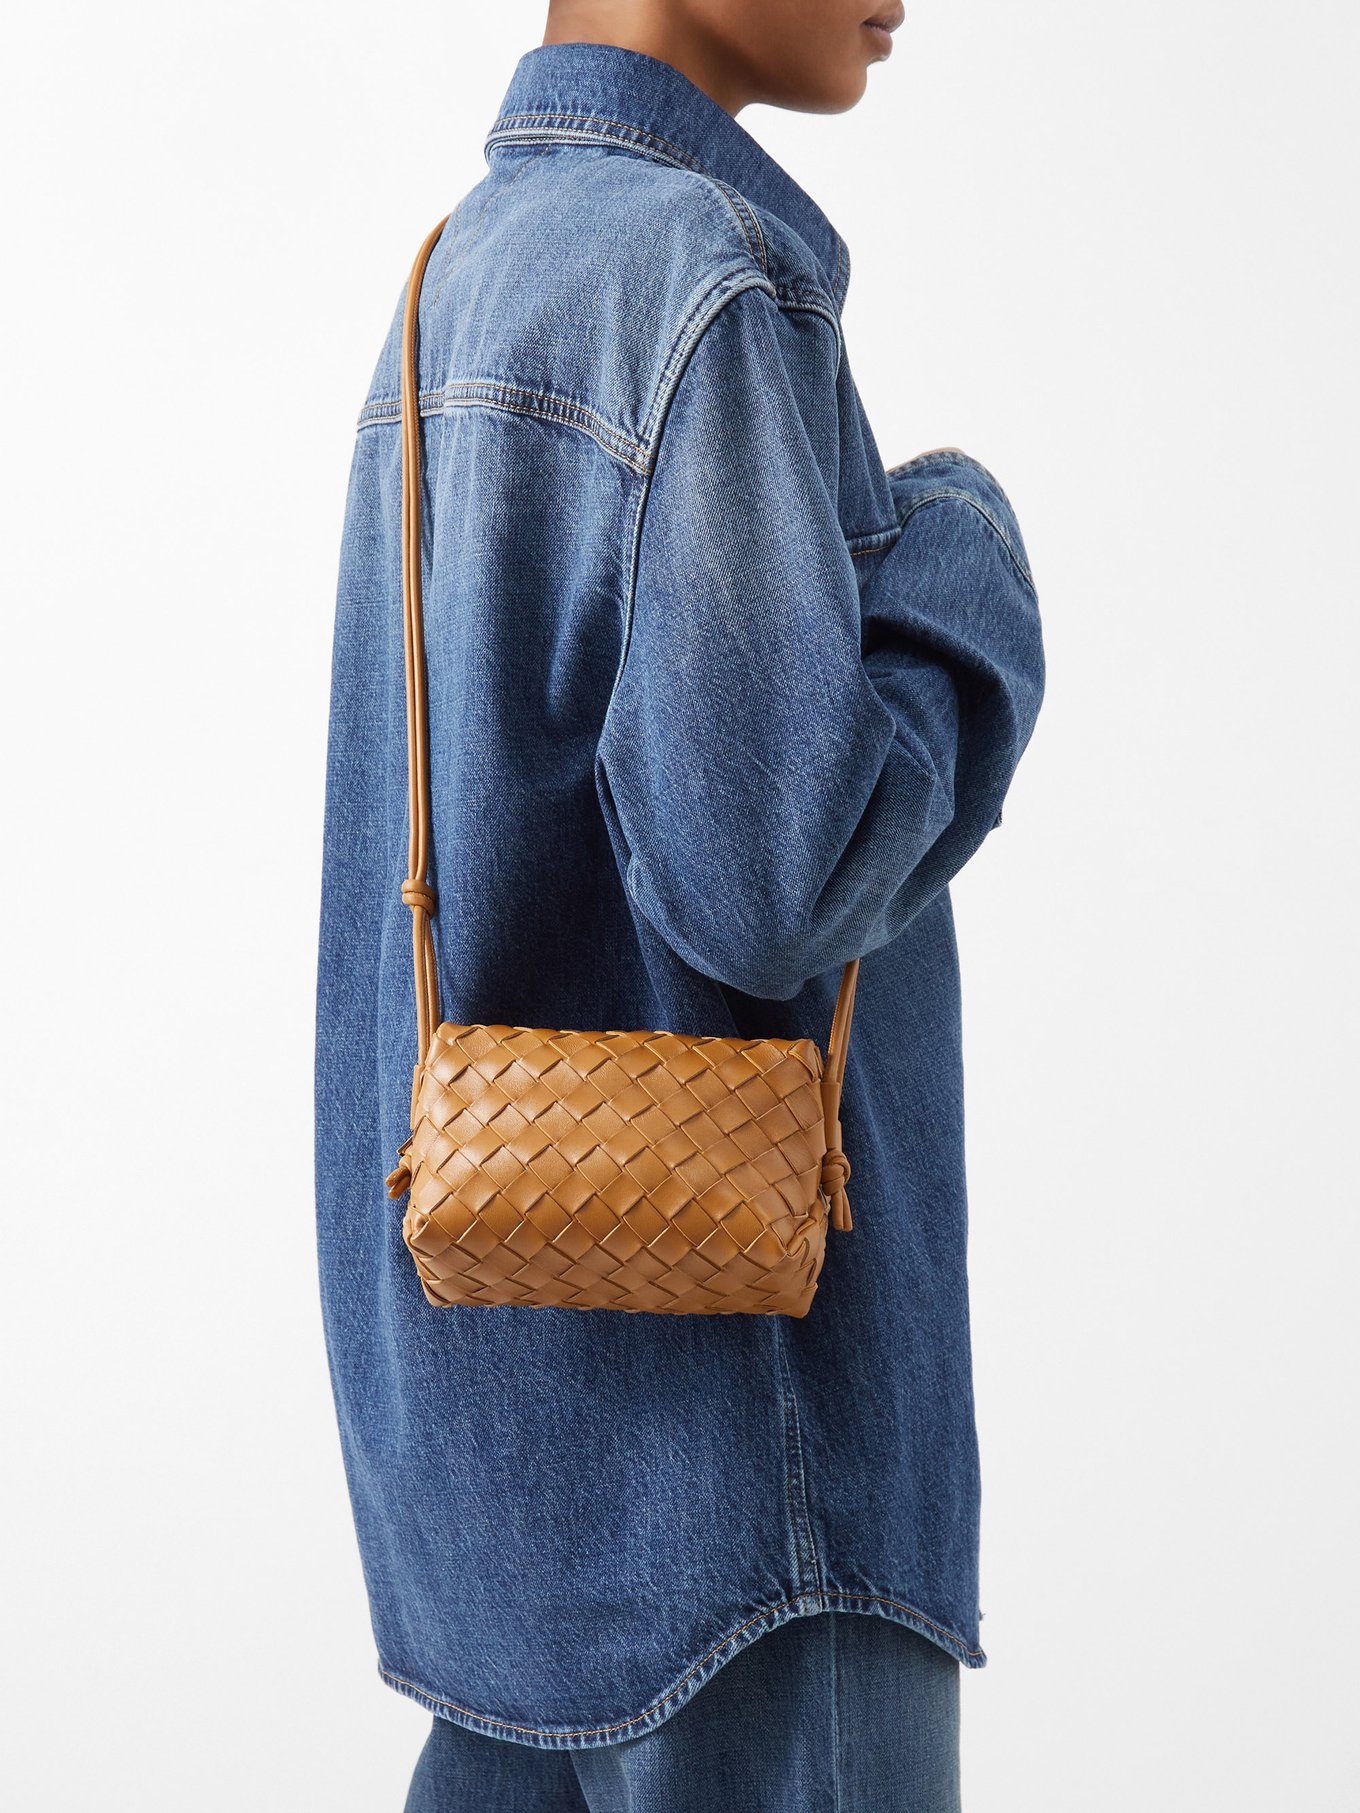 Loop Bottega Veneta Bag in Brushed Leather